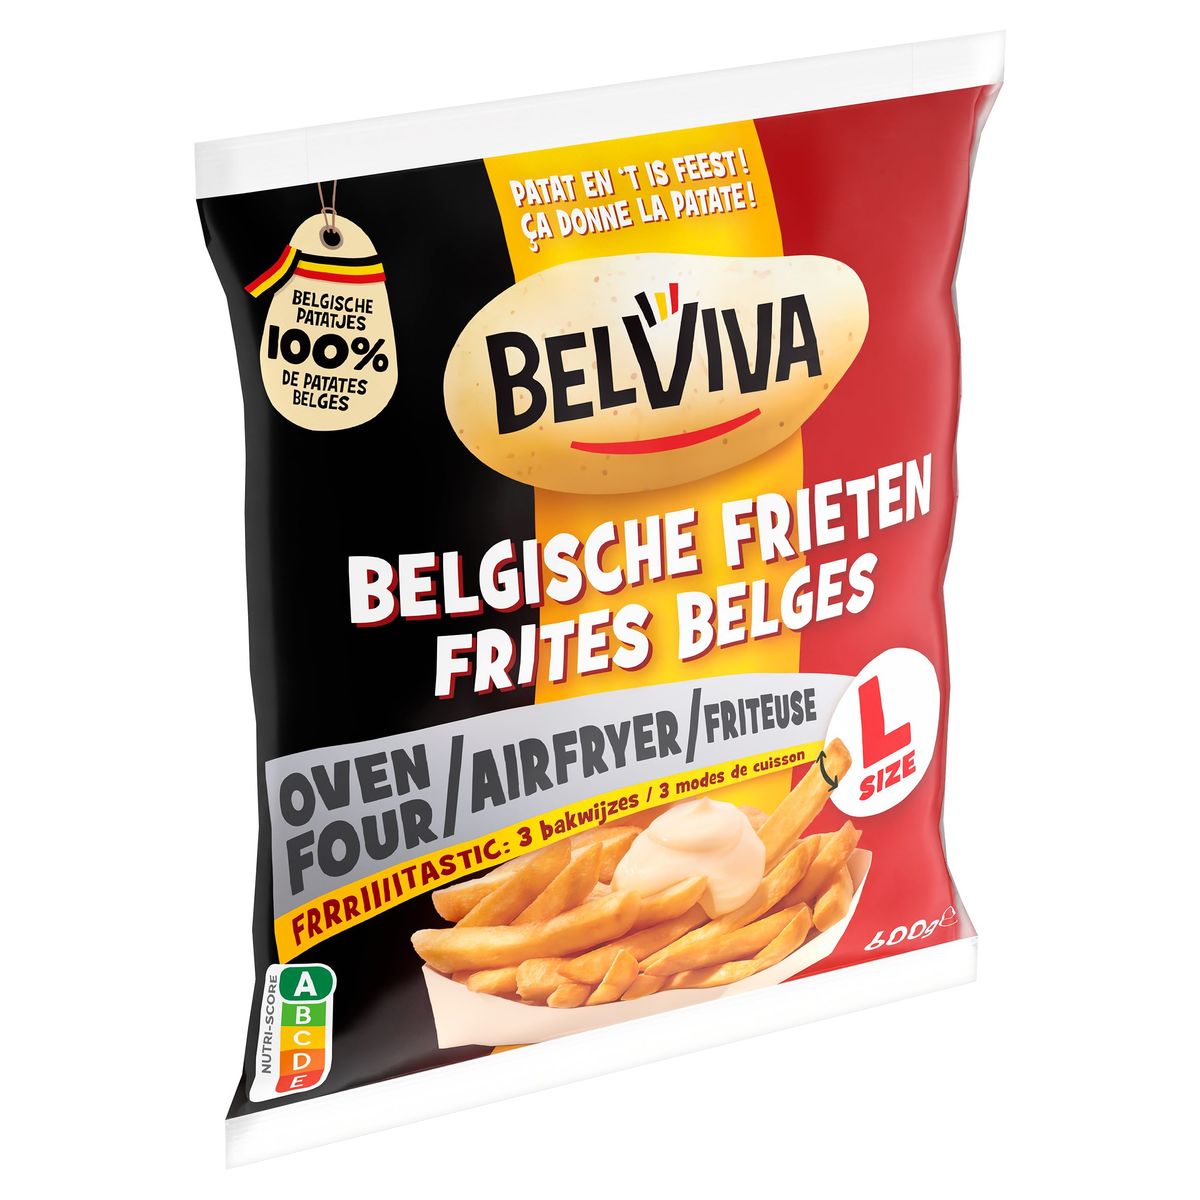 Belviva Frites Belges Four Airfryer Friteuse L Size 600 g